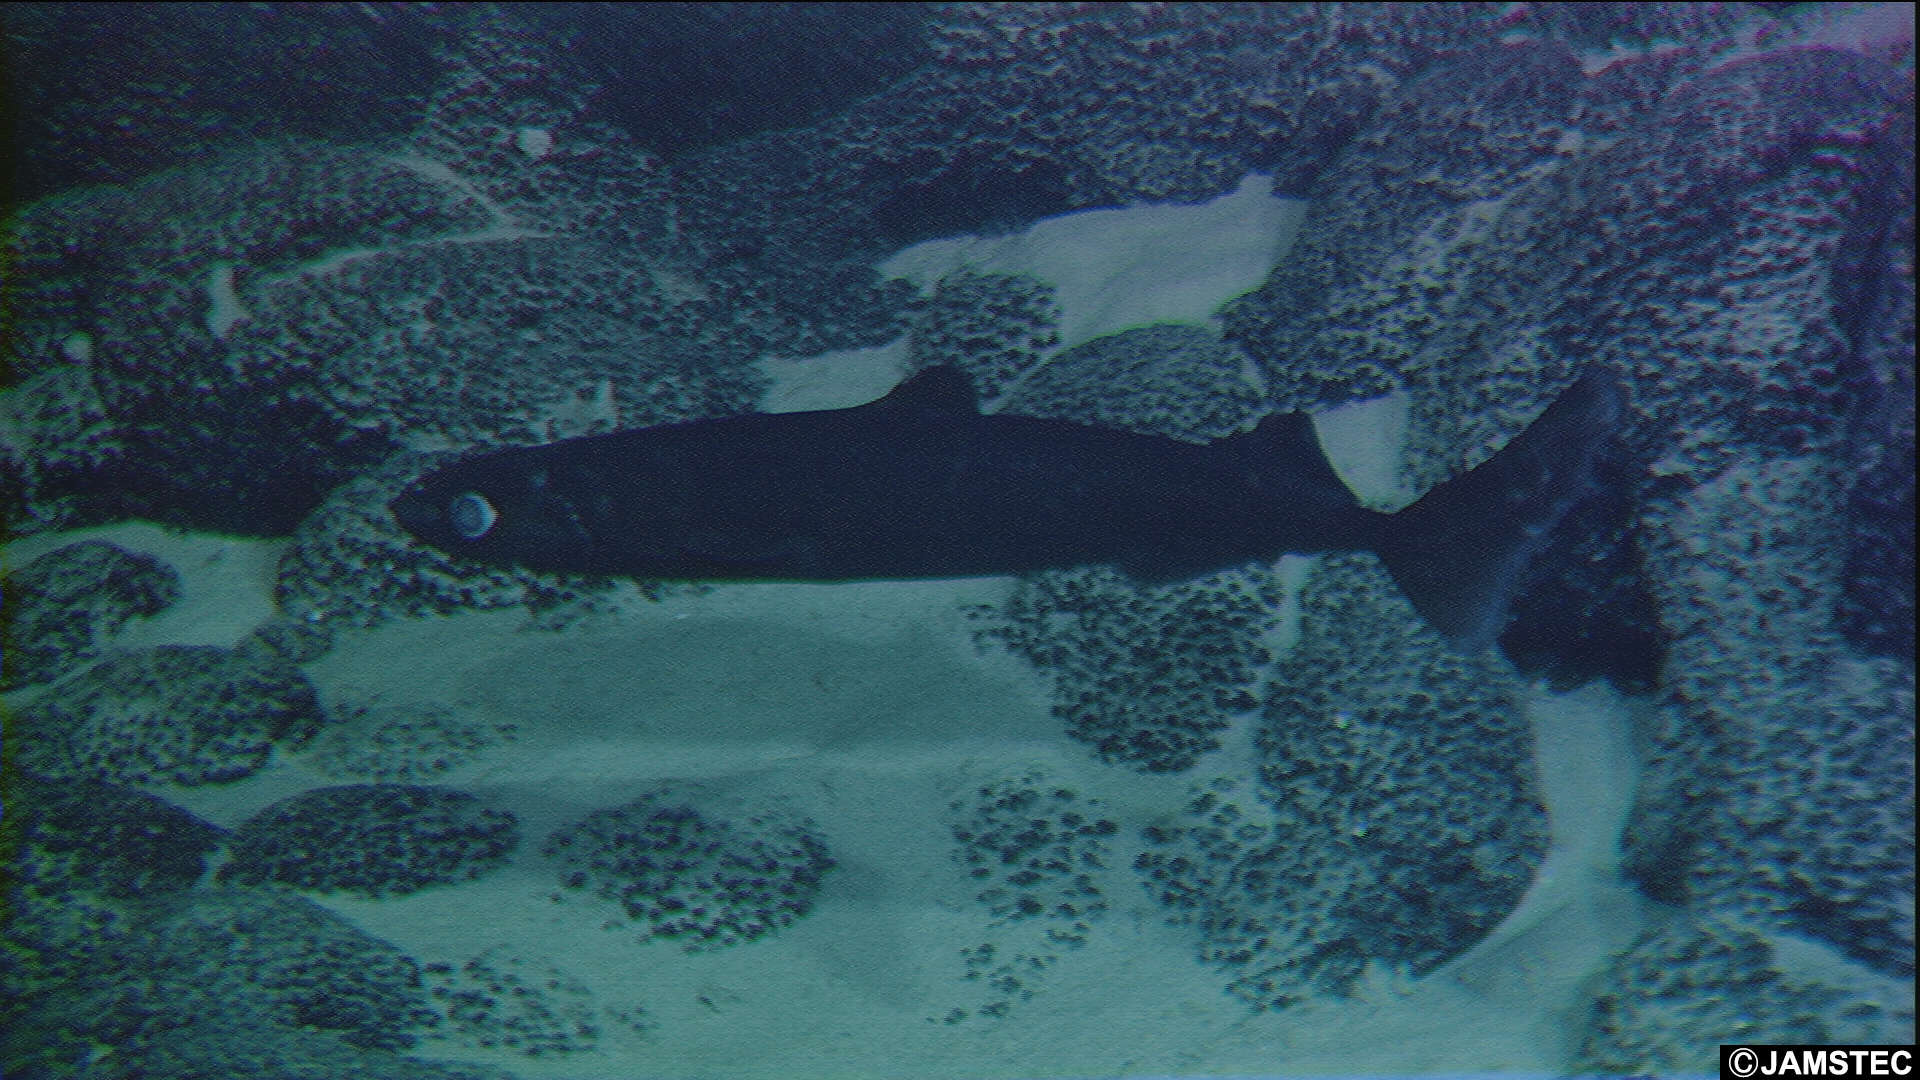 Image of sleeper sharks